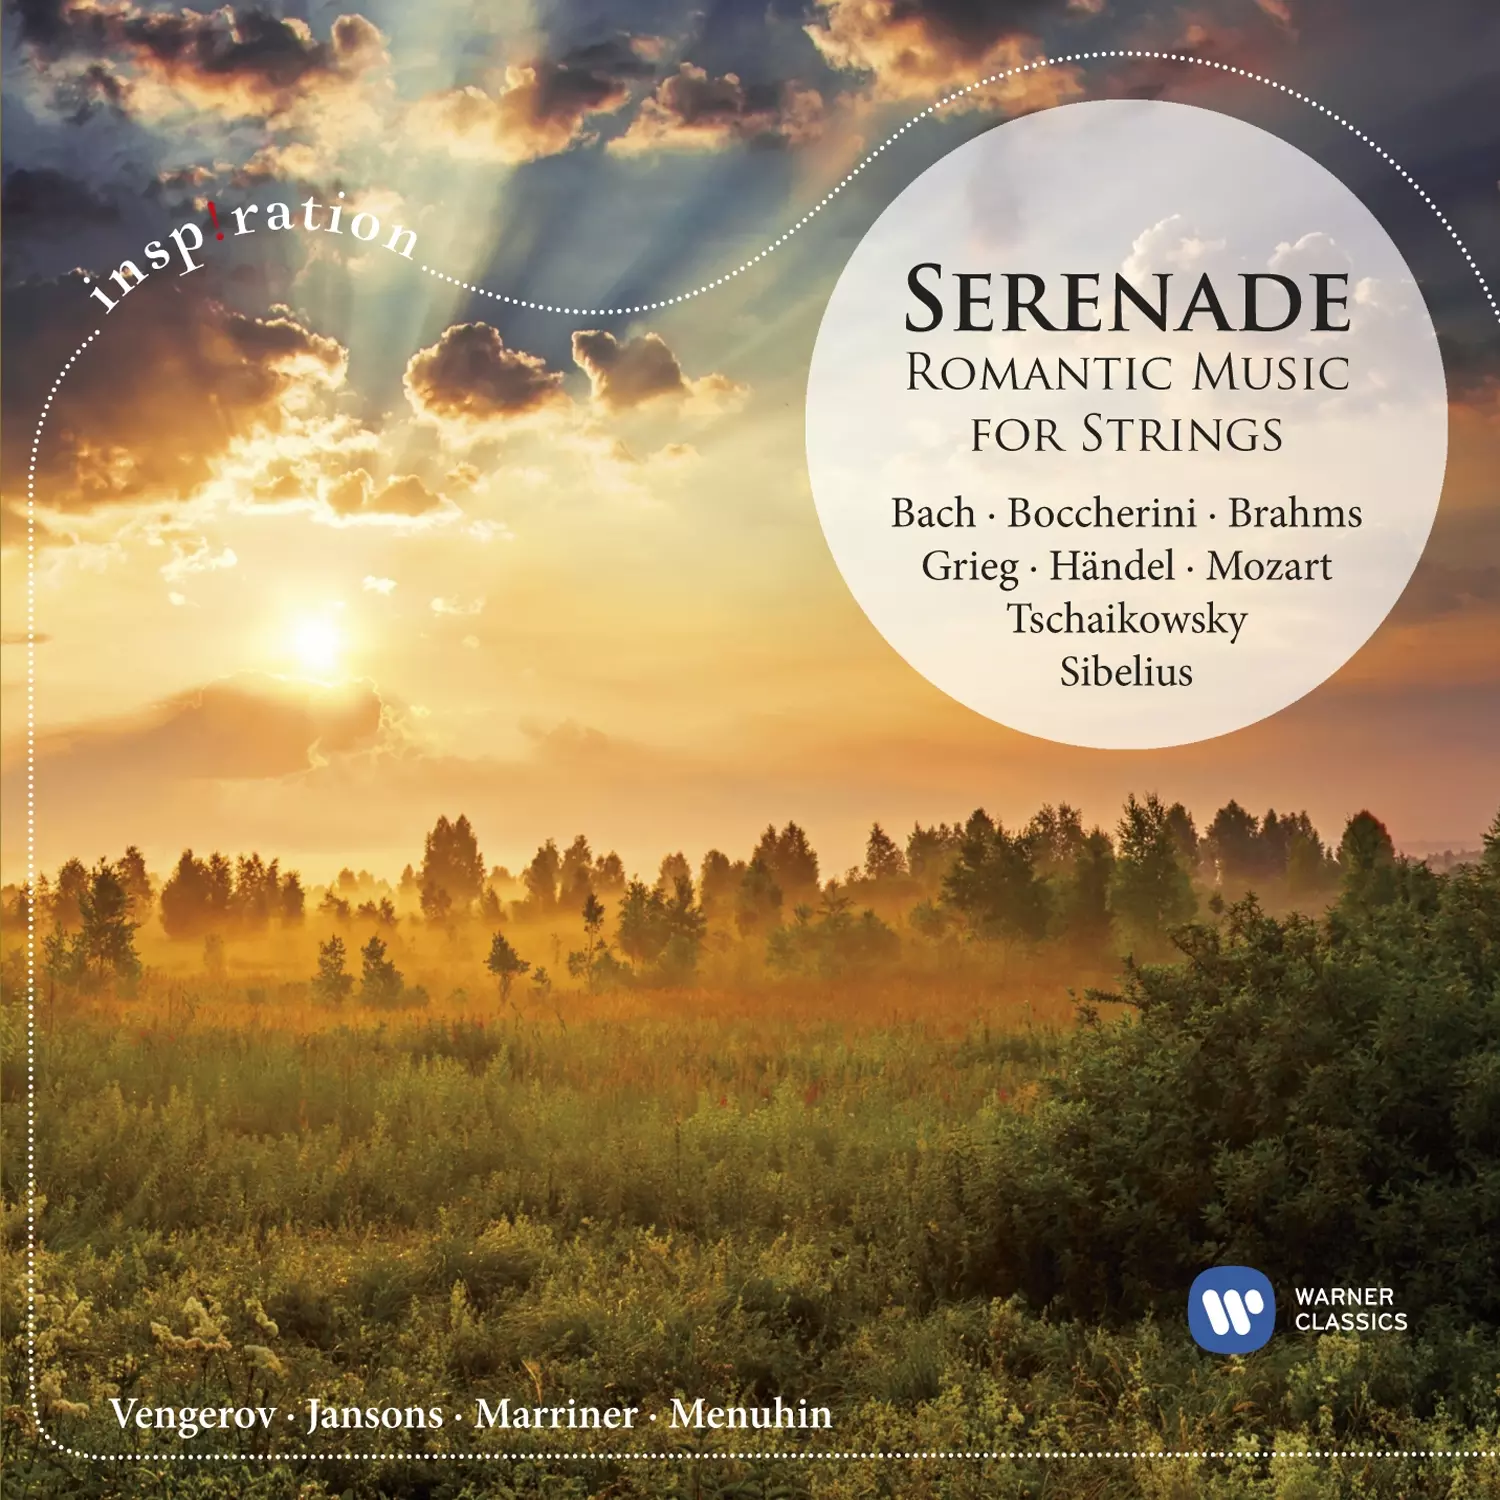 Serenade: Romantic Music for Strings